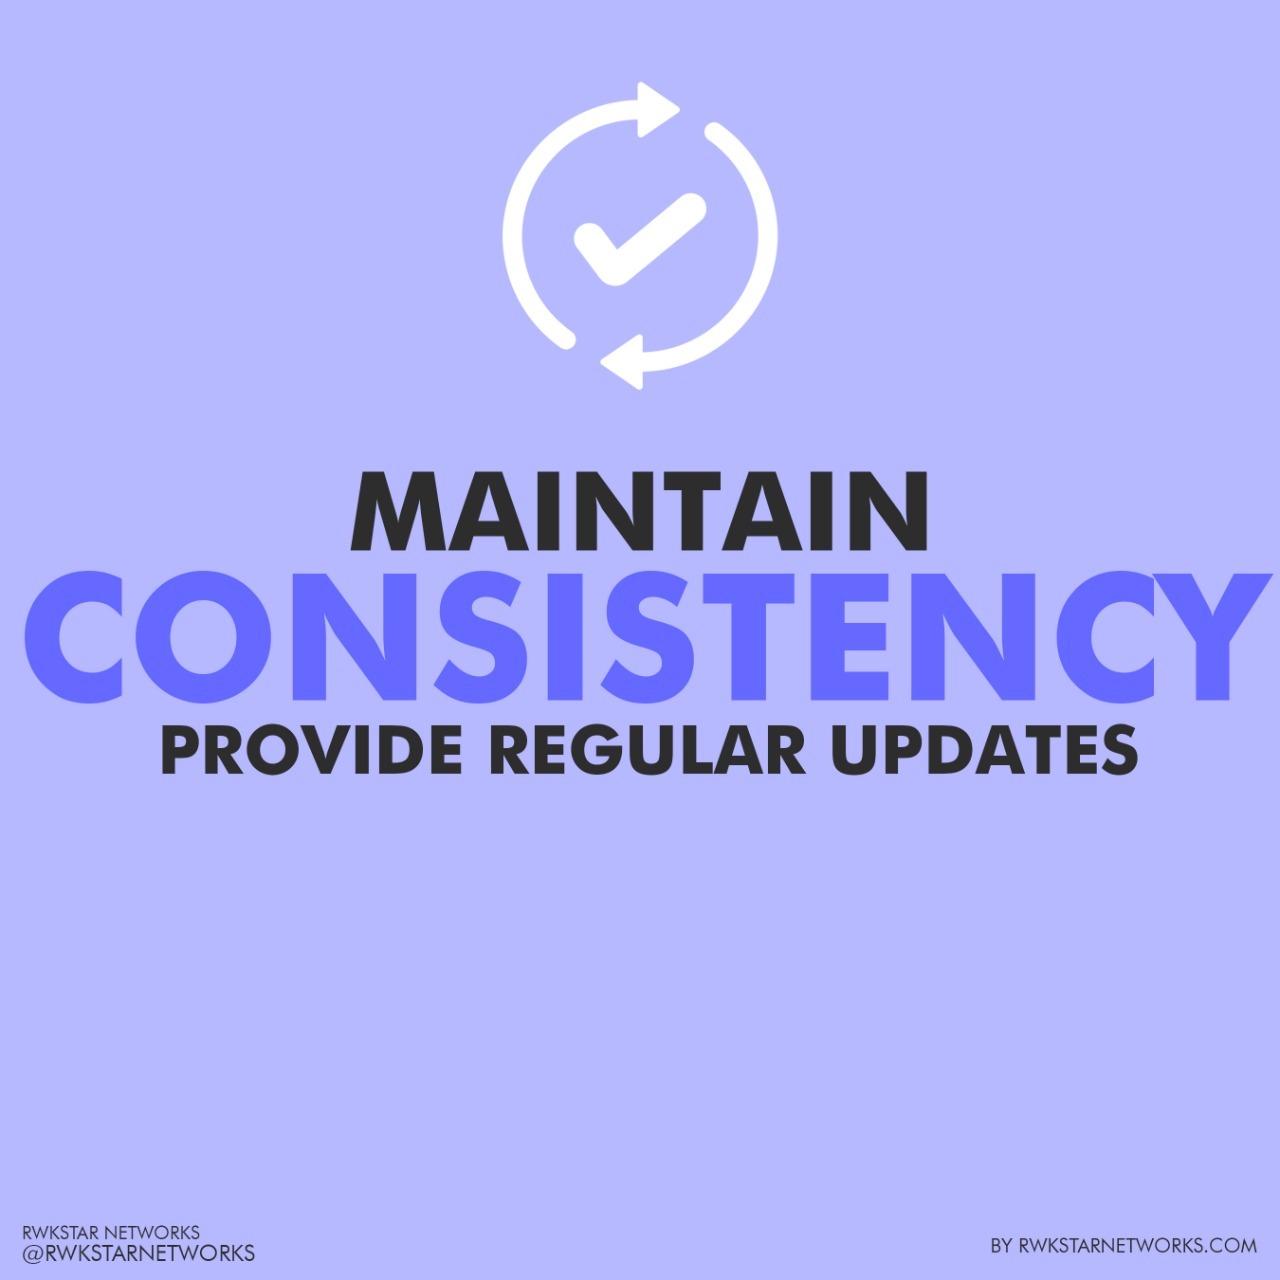 Maintain consistency